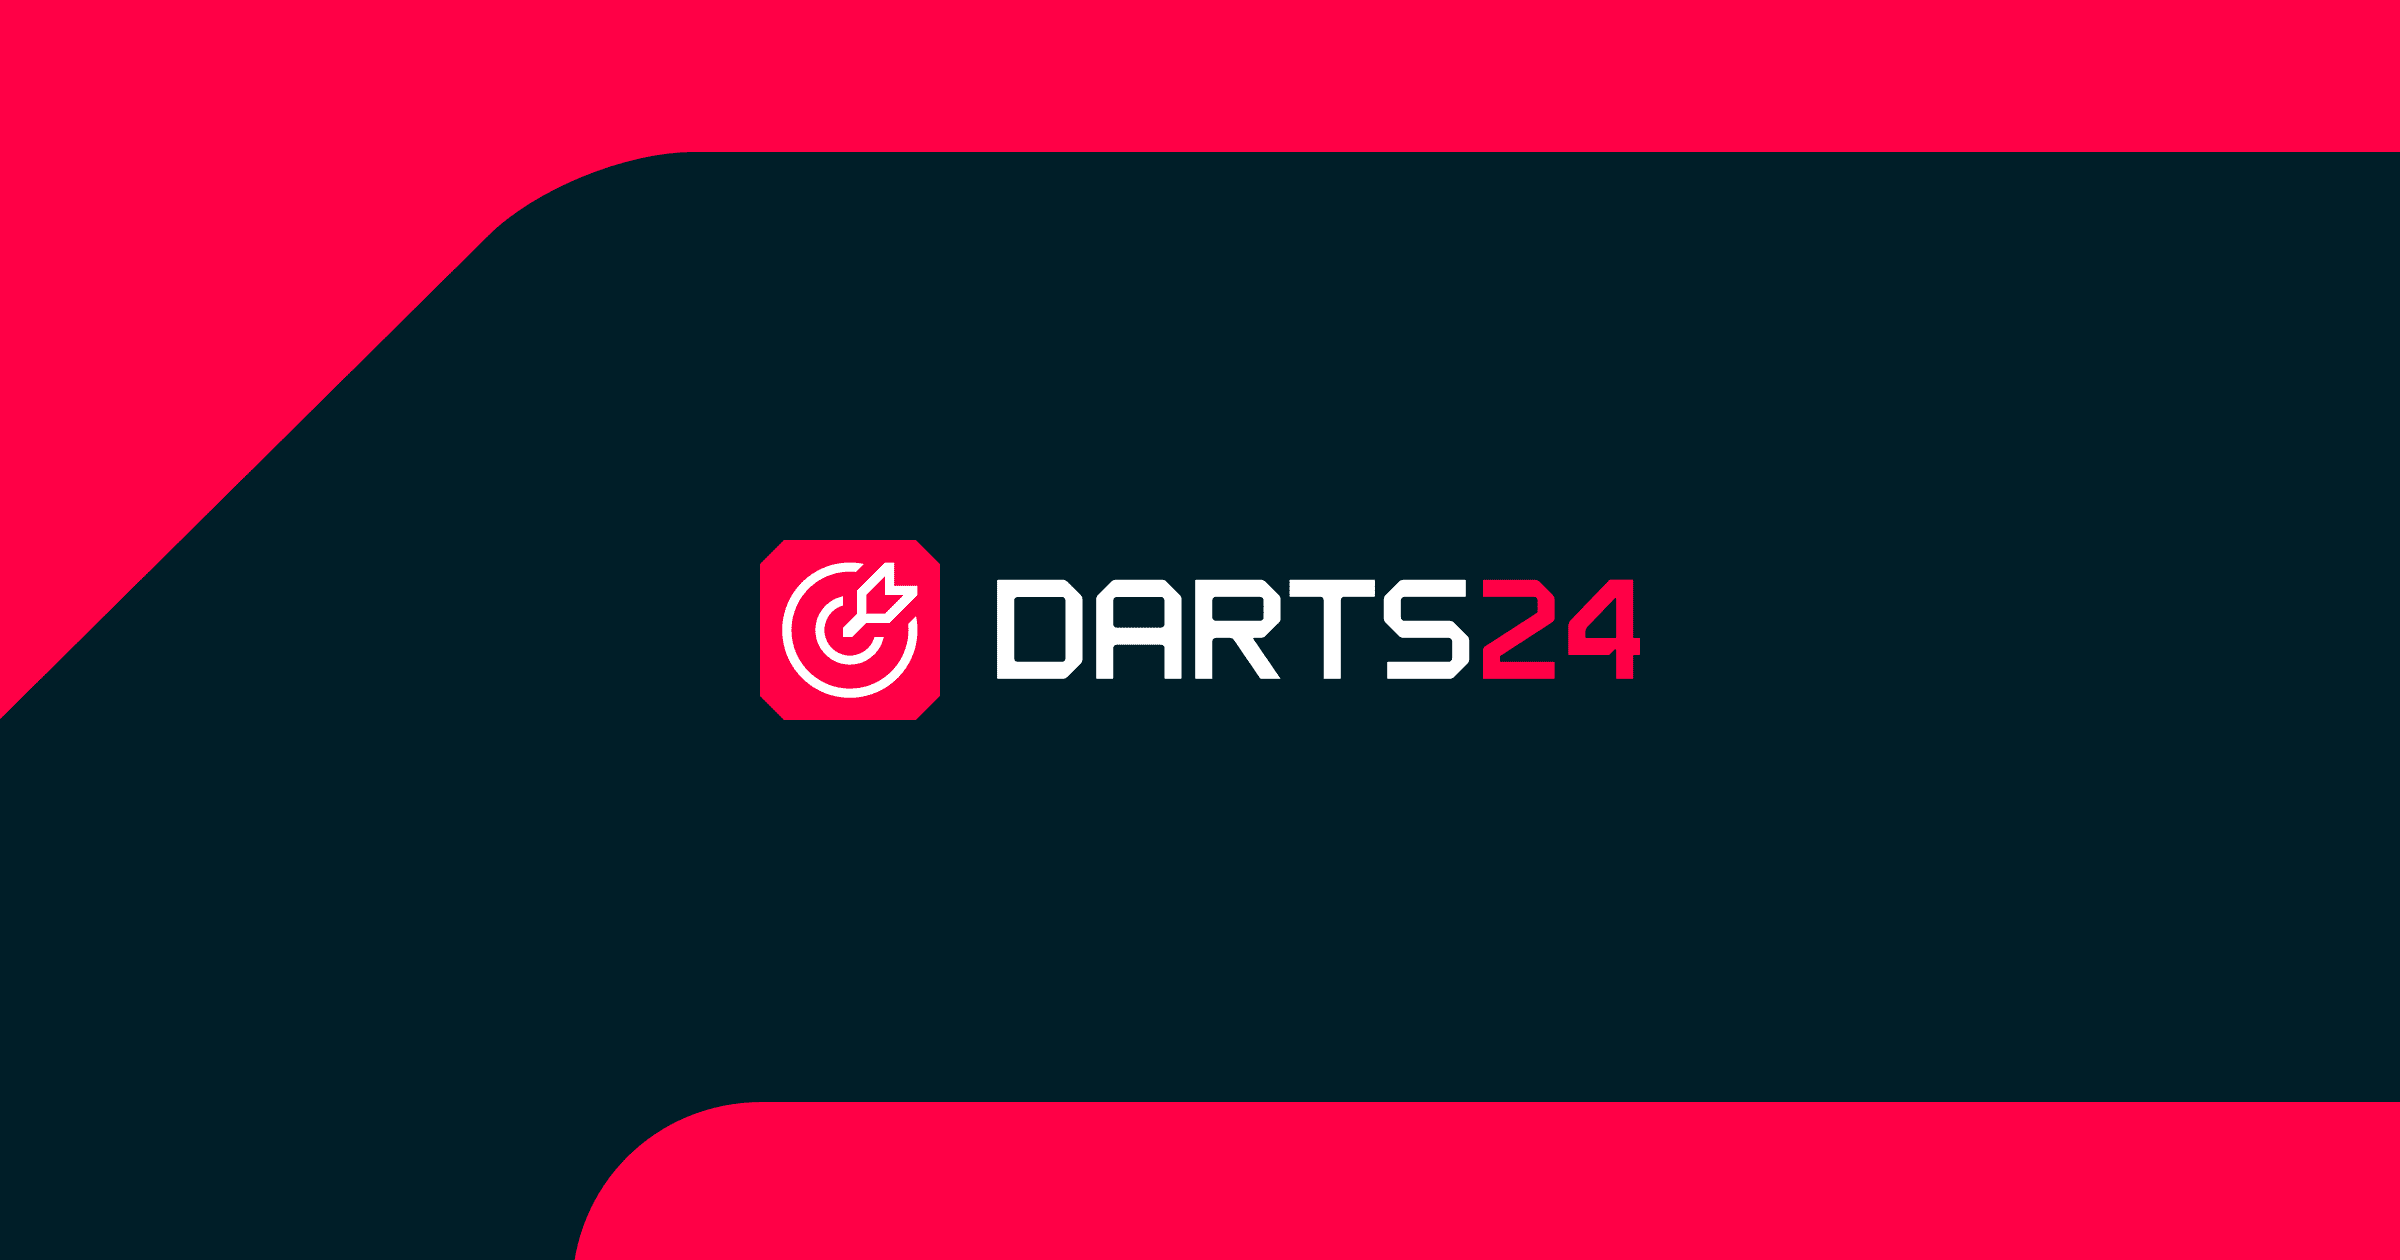 Darts 24 Players Championship Finals Live scores